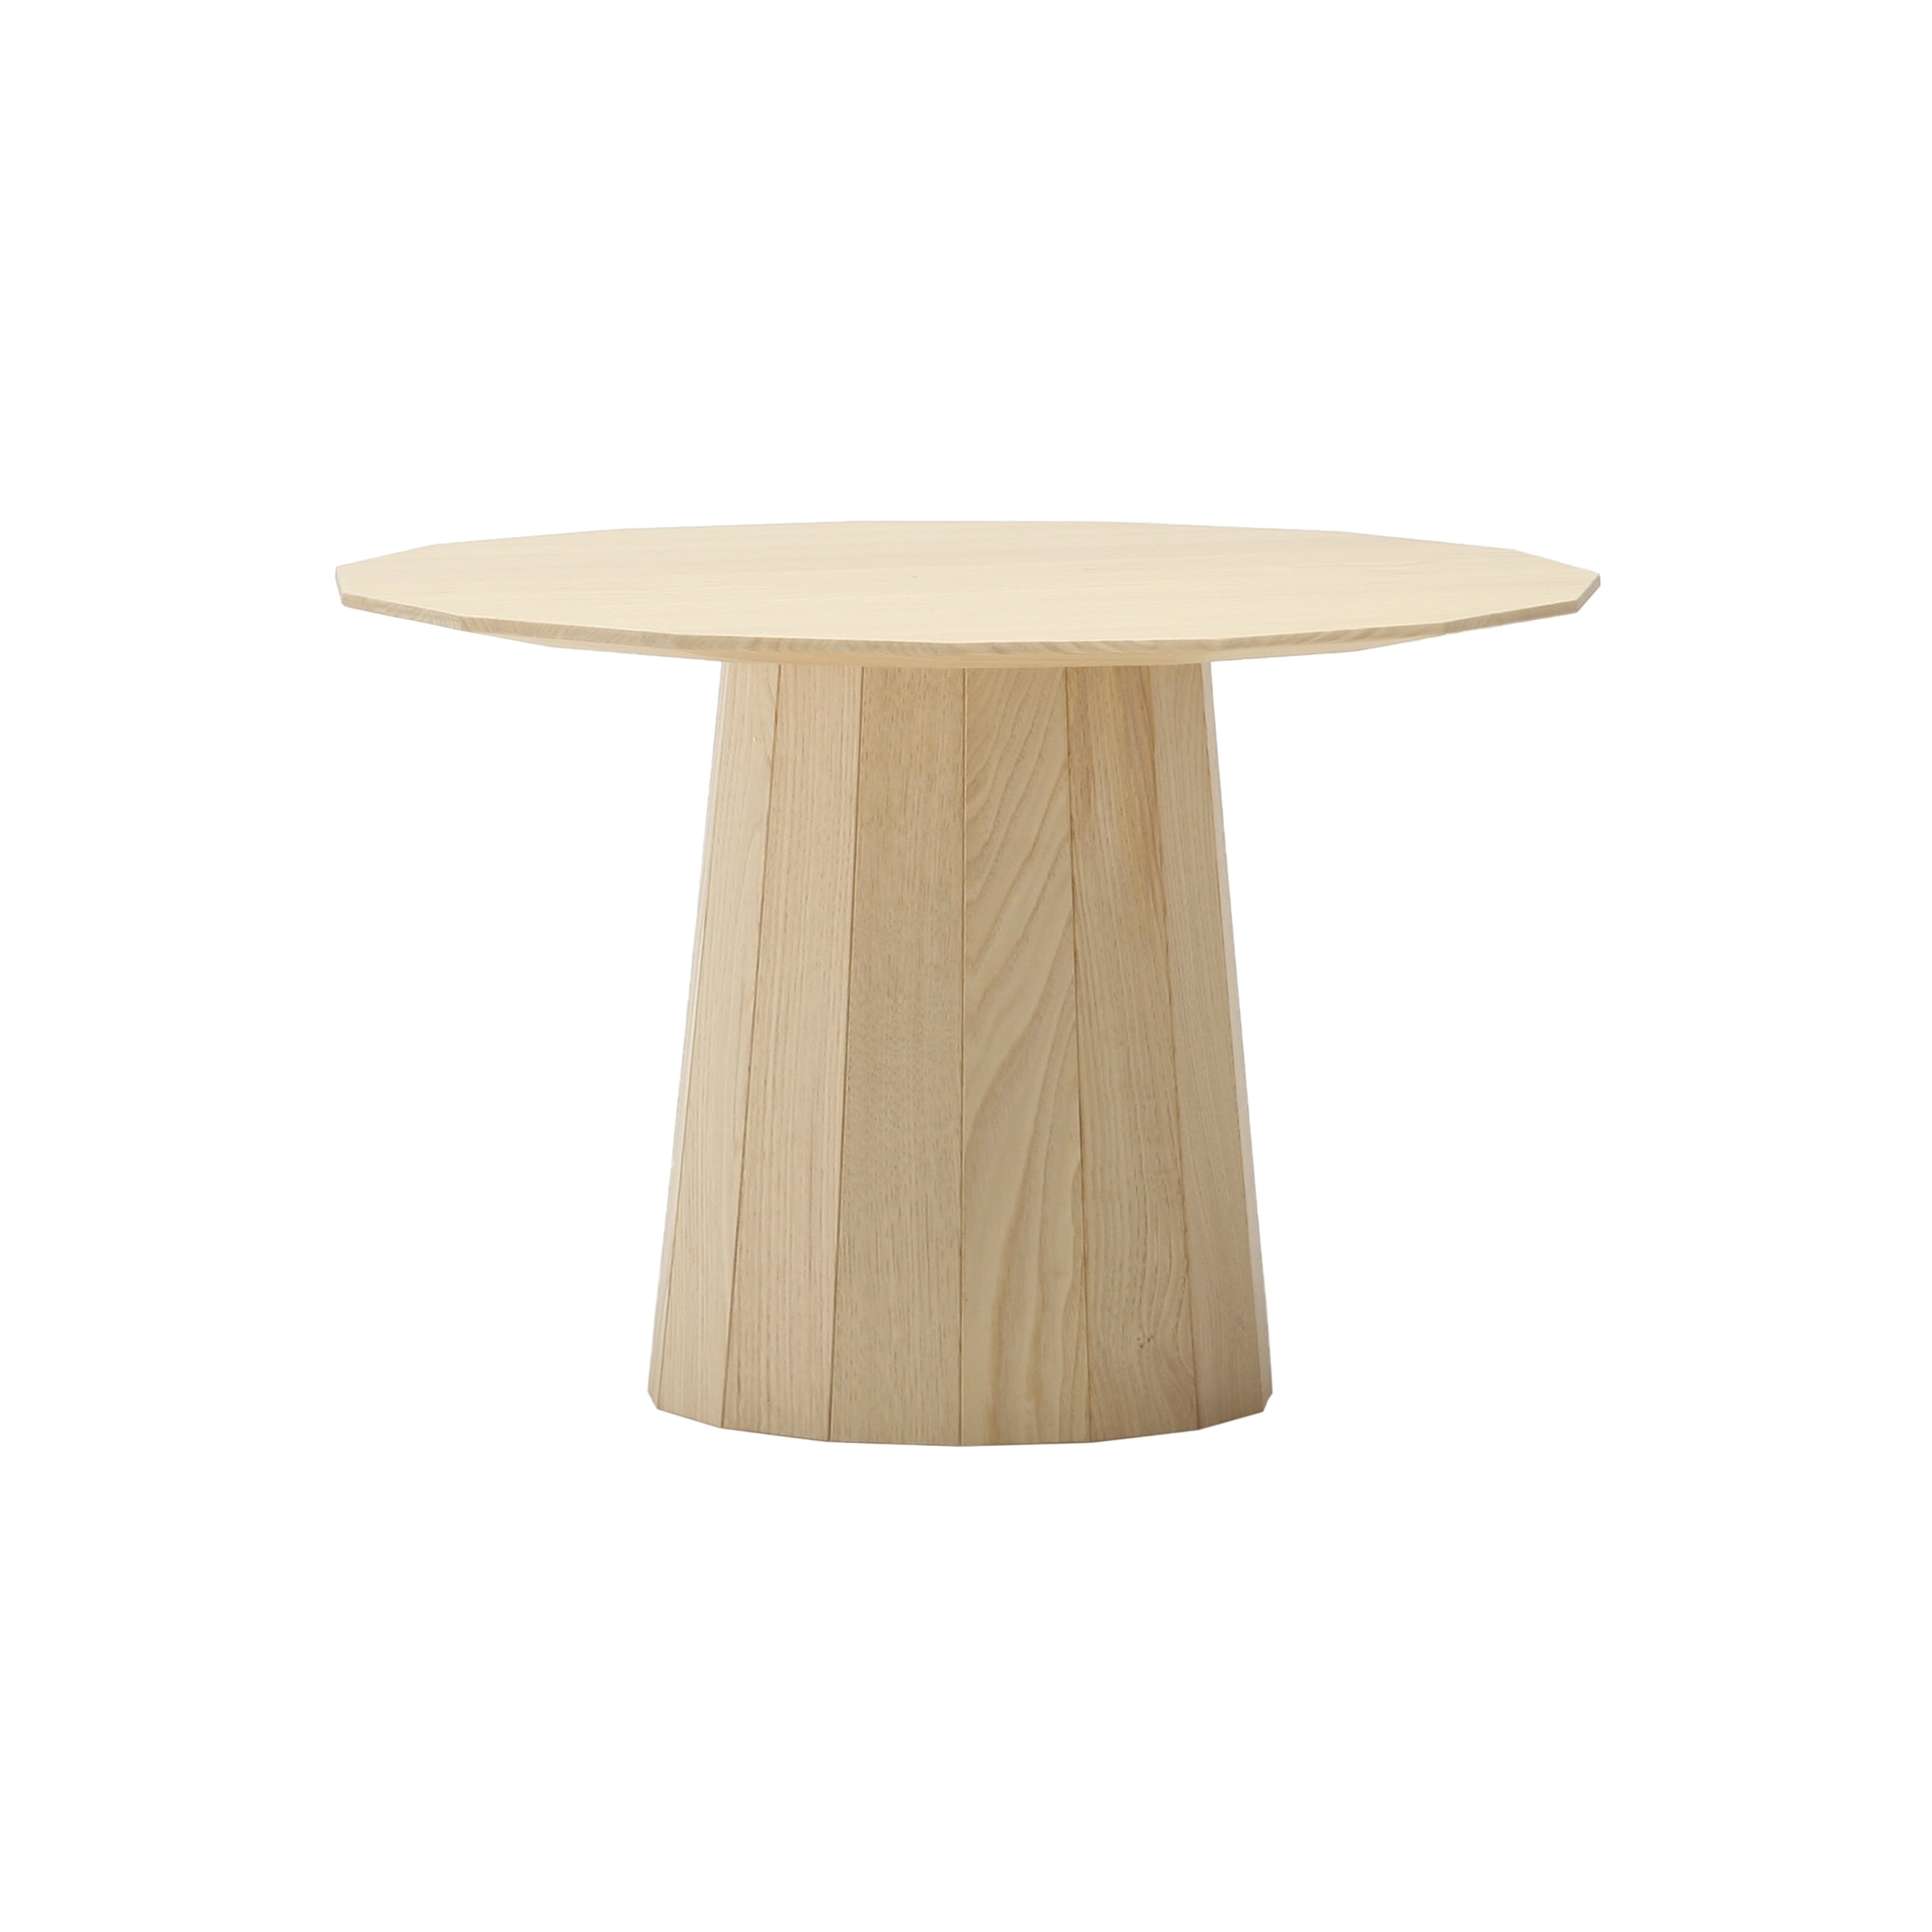 Colour Wood Plain Tables: Medium - 23.7